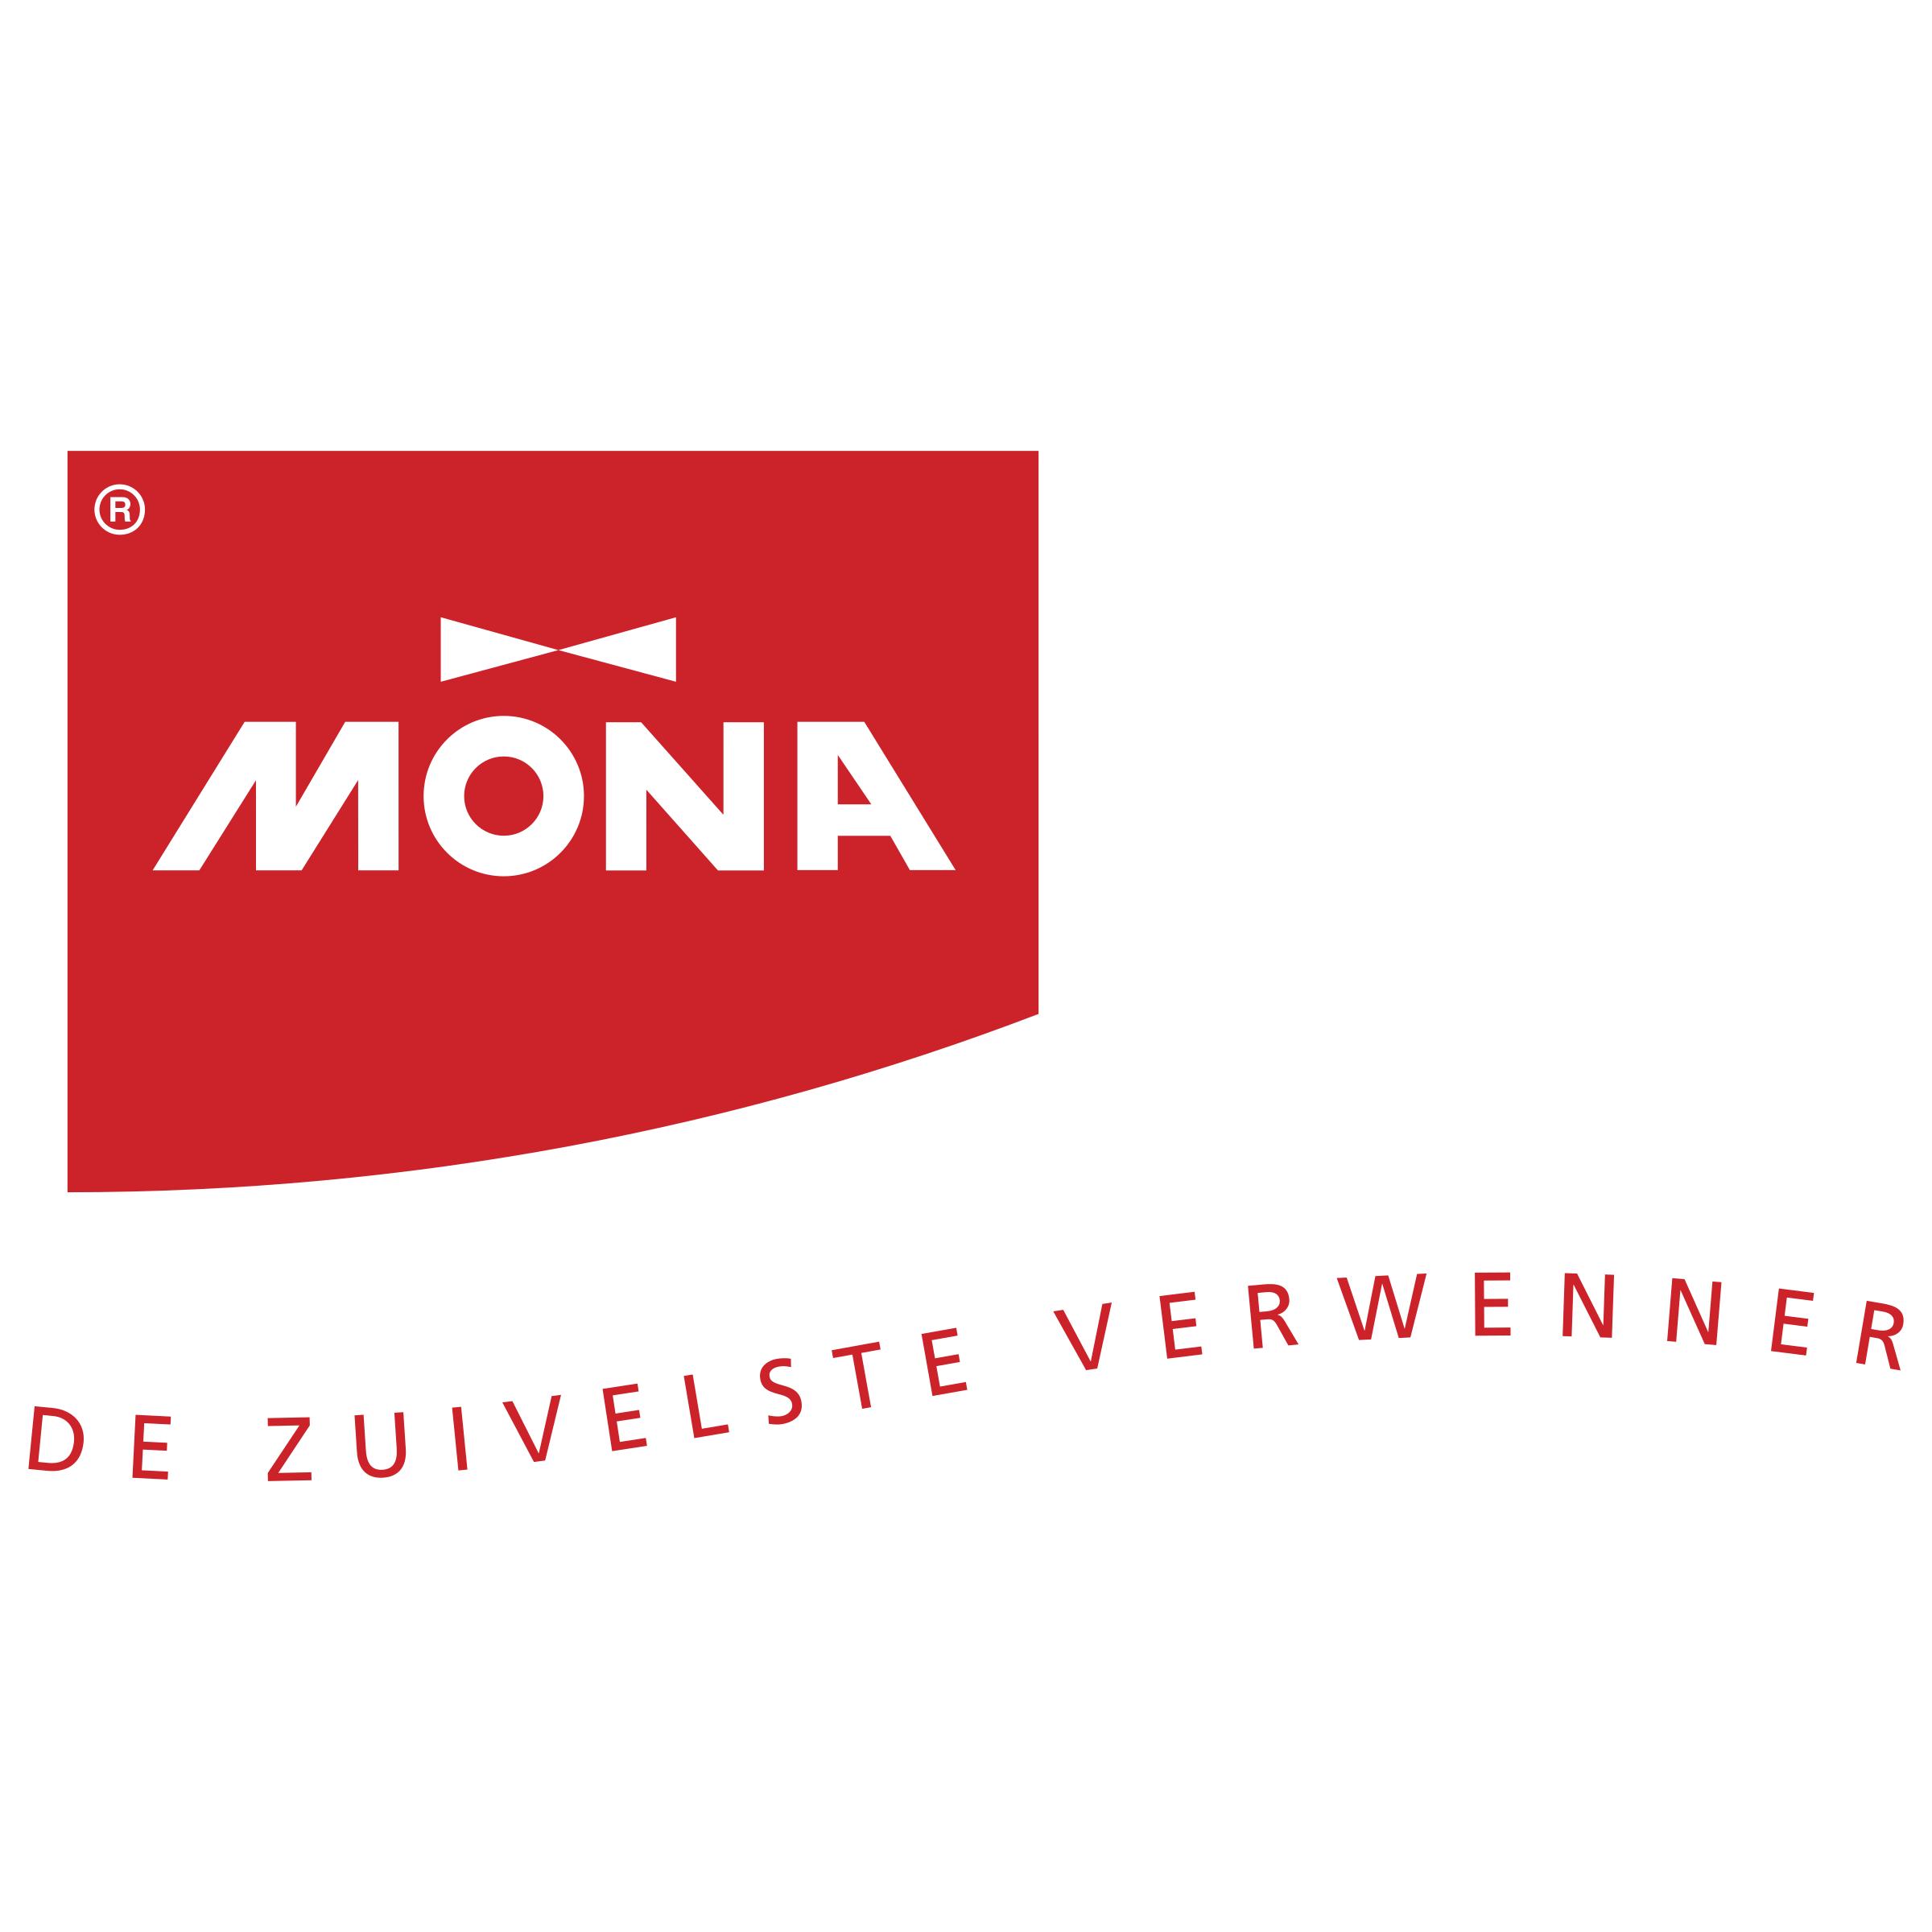 Mona Logo - Mona Logo PNG Transparent & SVG Vector - Freebie Supply